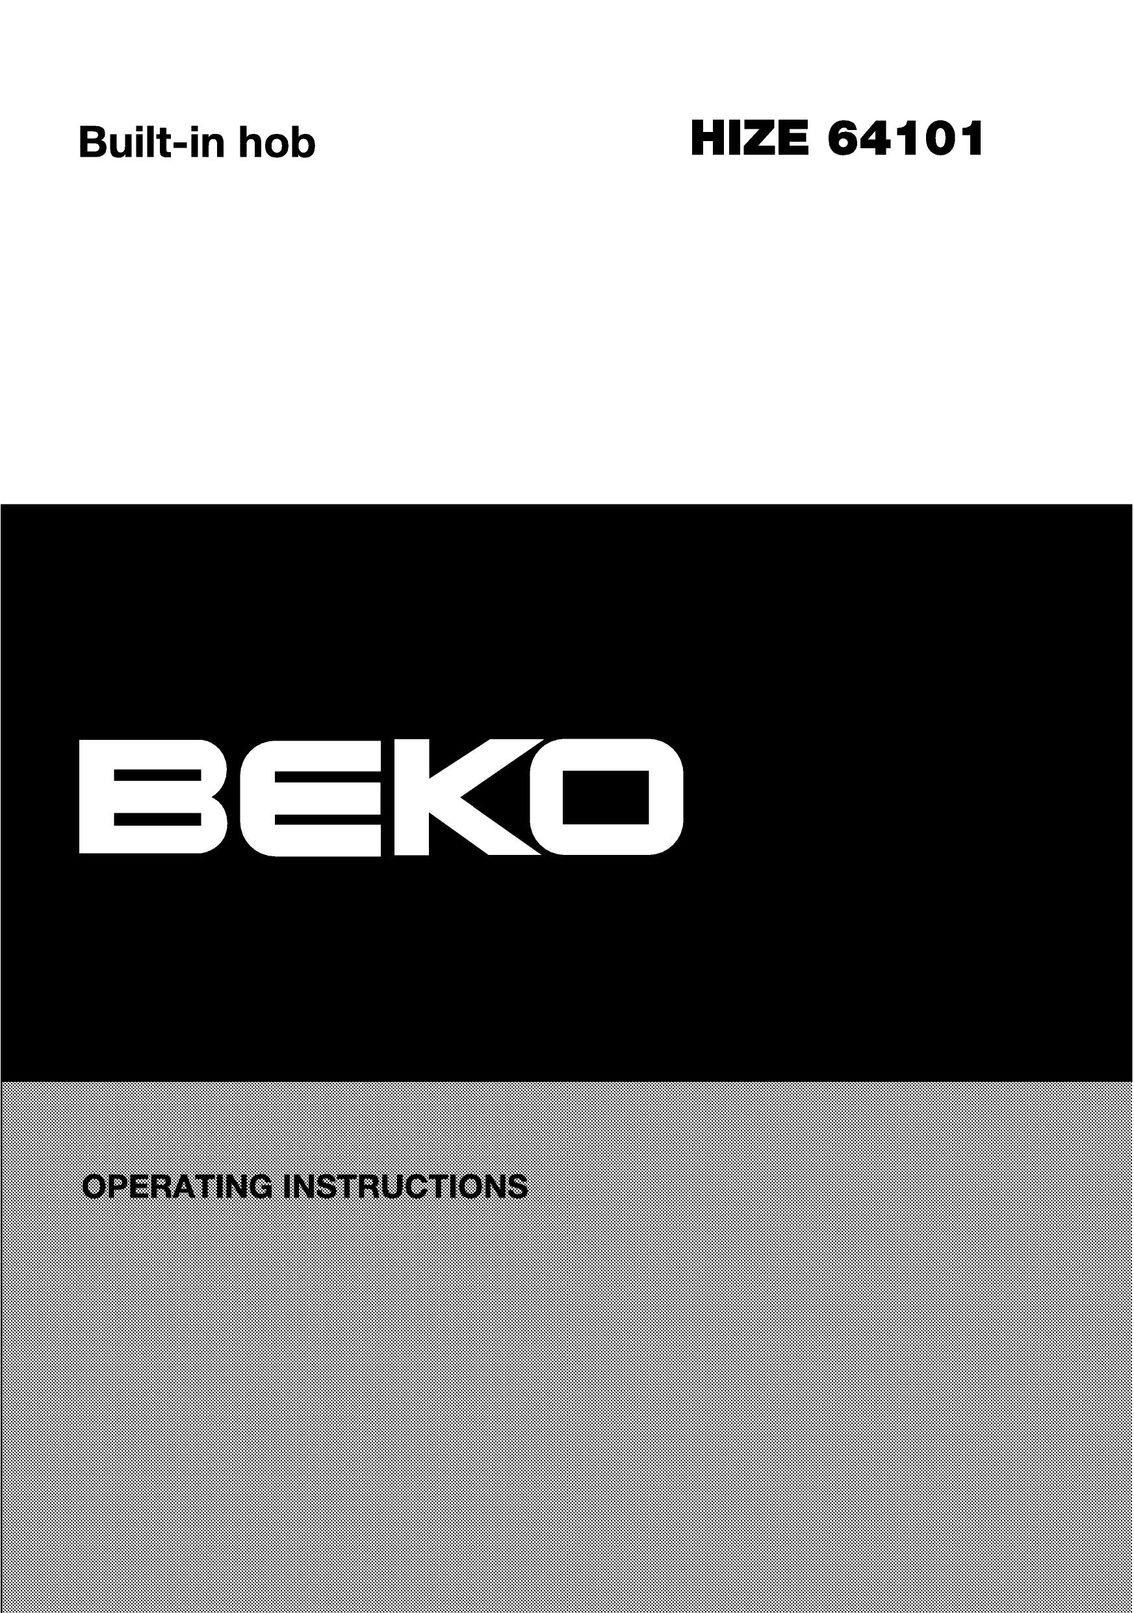 Beko HIZE 64101 Cooktop User Manual